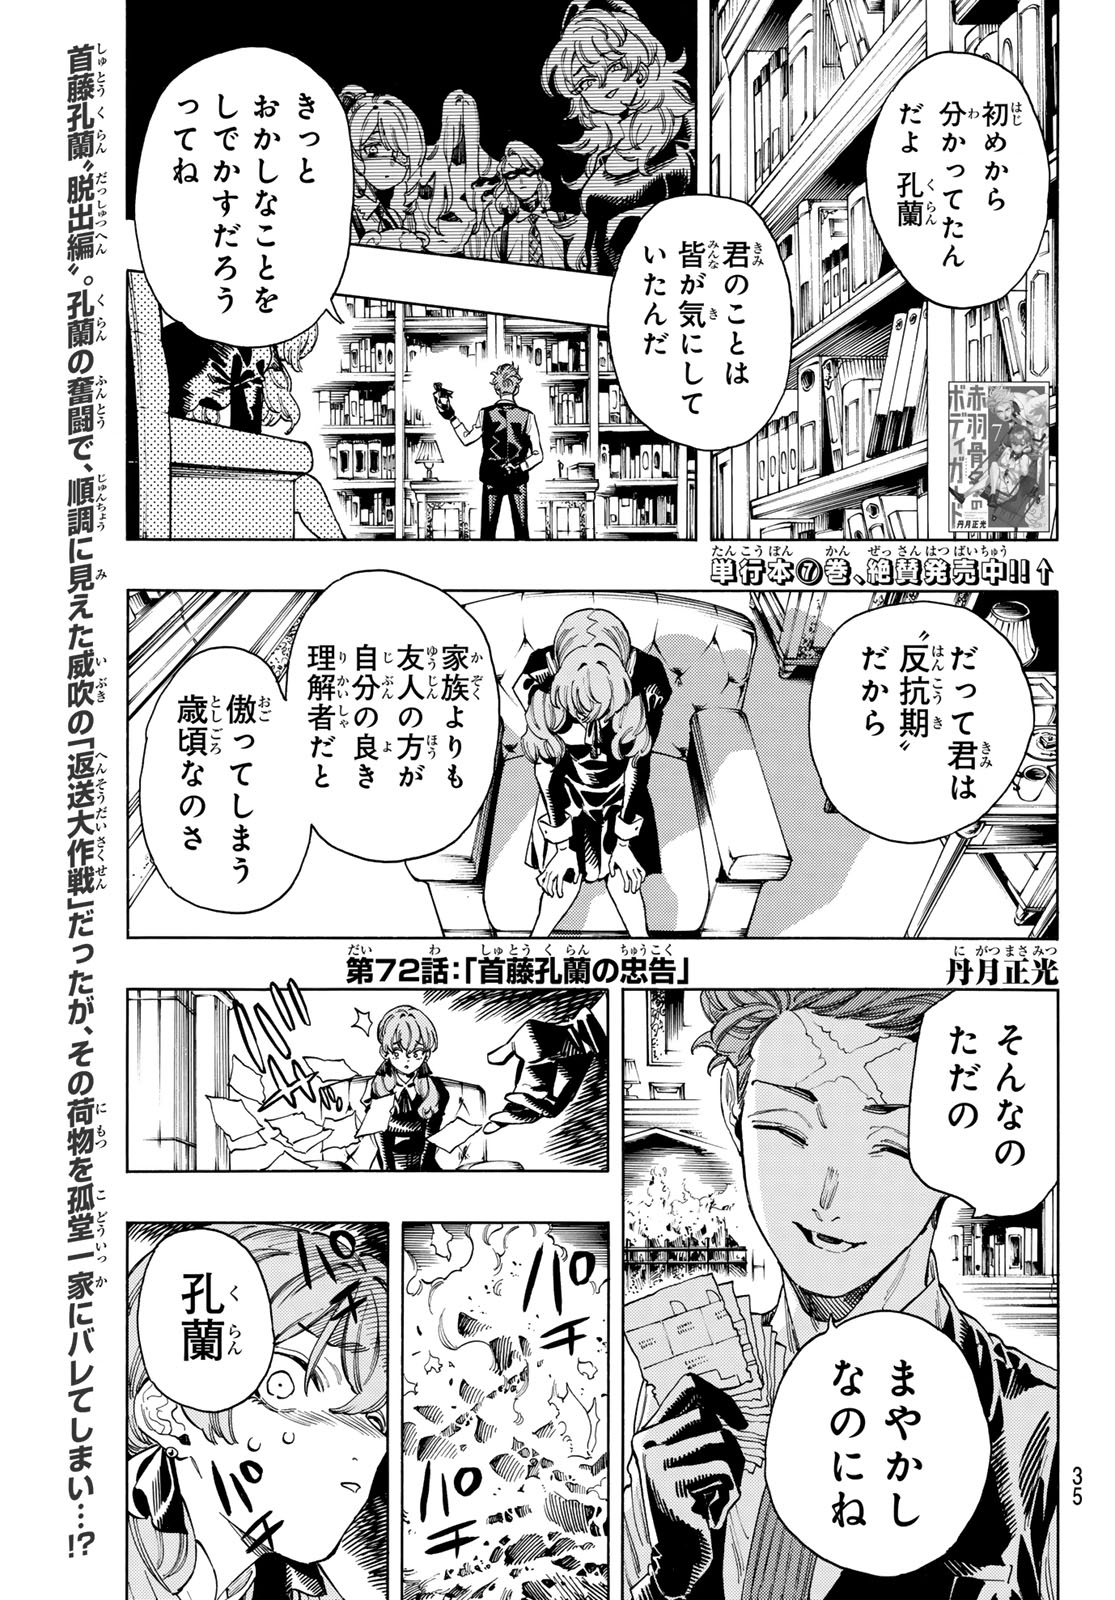 Akabane Honeko no Bodyguard - Chapter 72 - Page 1